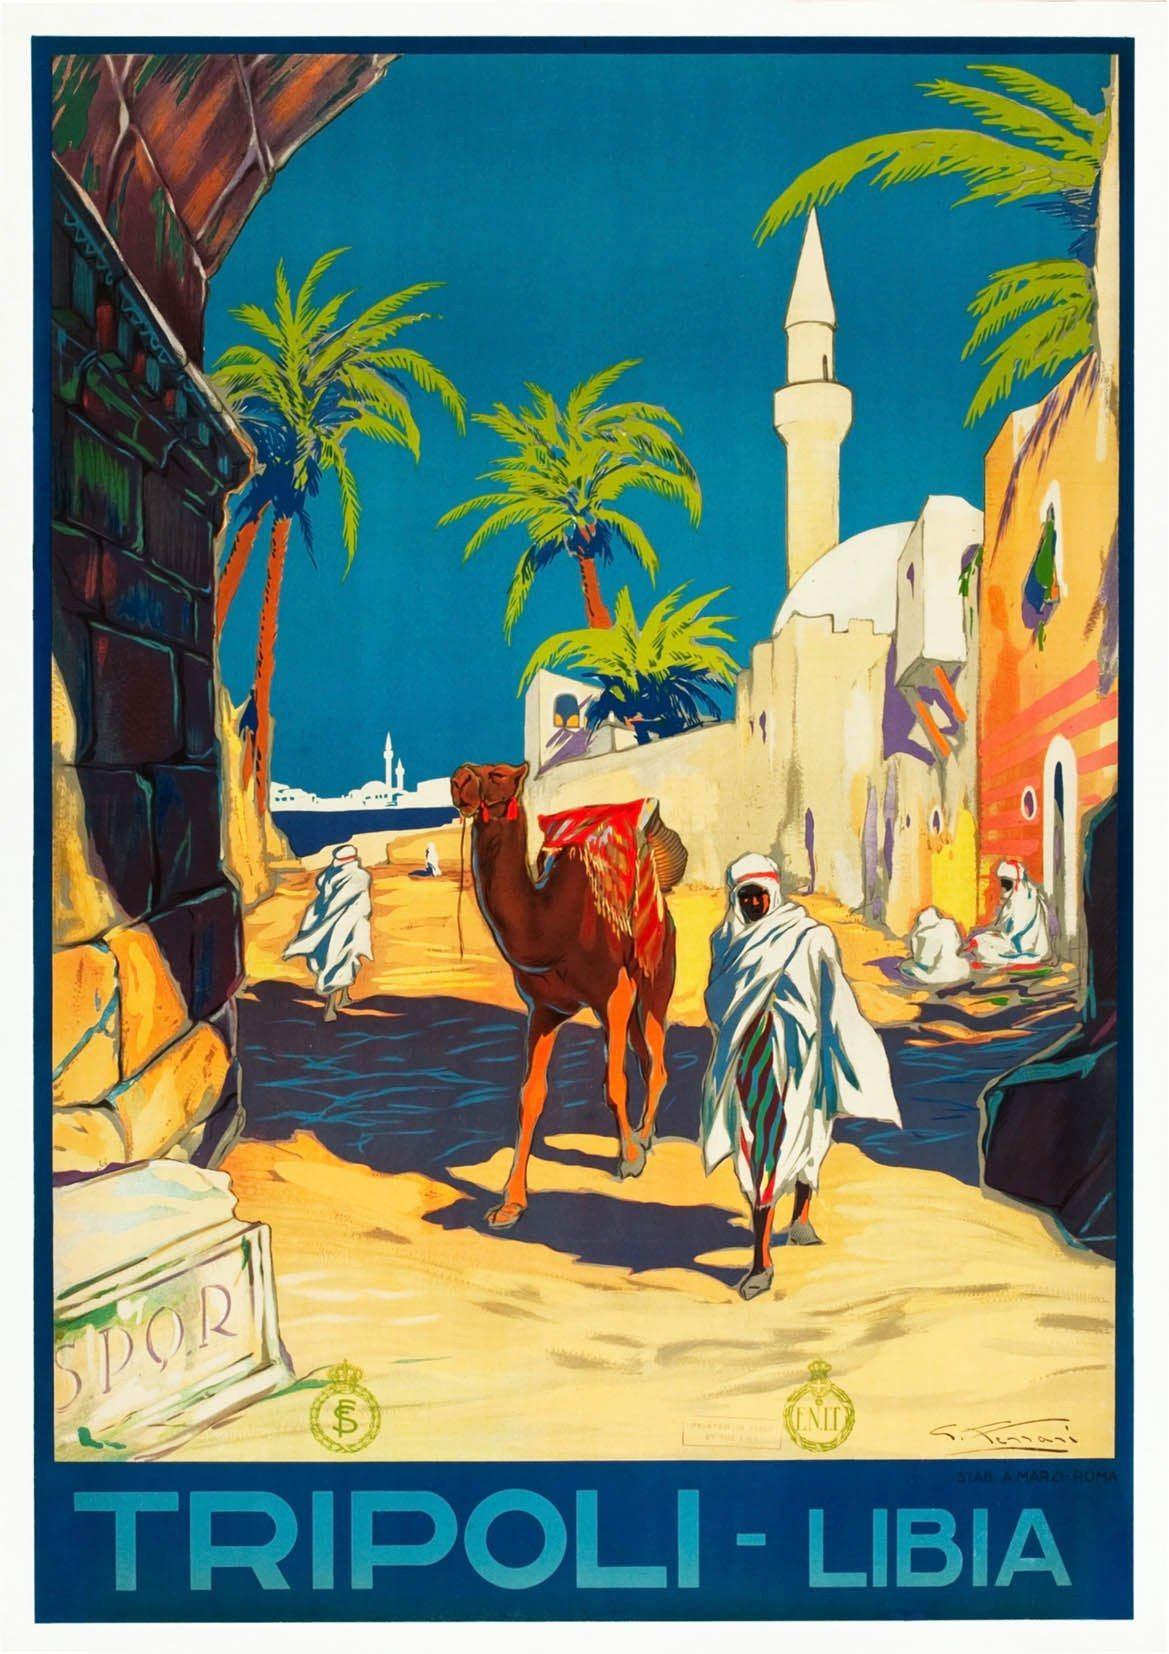 TRIPOLI TOURISM POSTER: Vintage Libya Travel Advert Art Print - Pimlico Prints